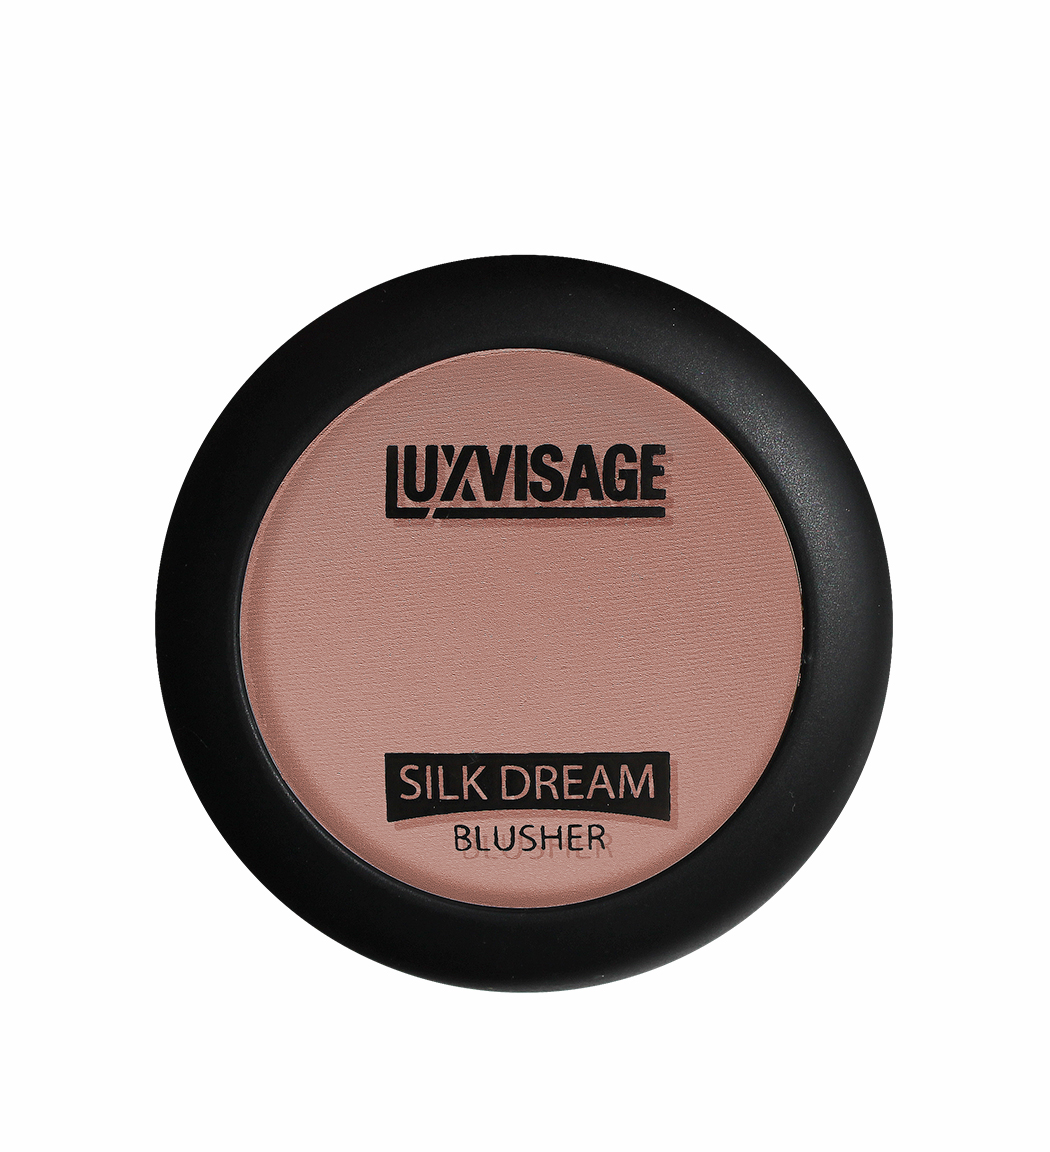 Luxvisage Шелковистые румяна Silk Dream, 5 г (Luxvisage, Лицо)